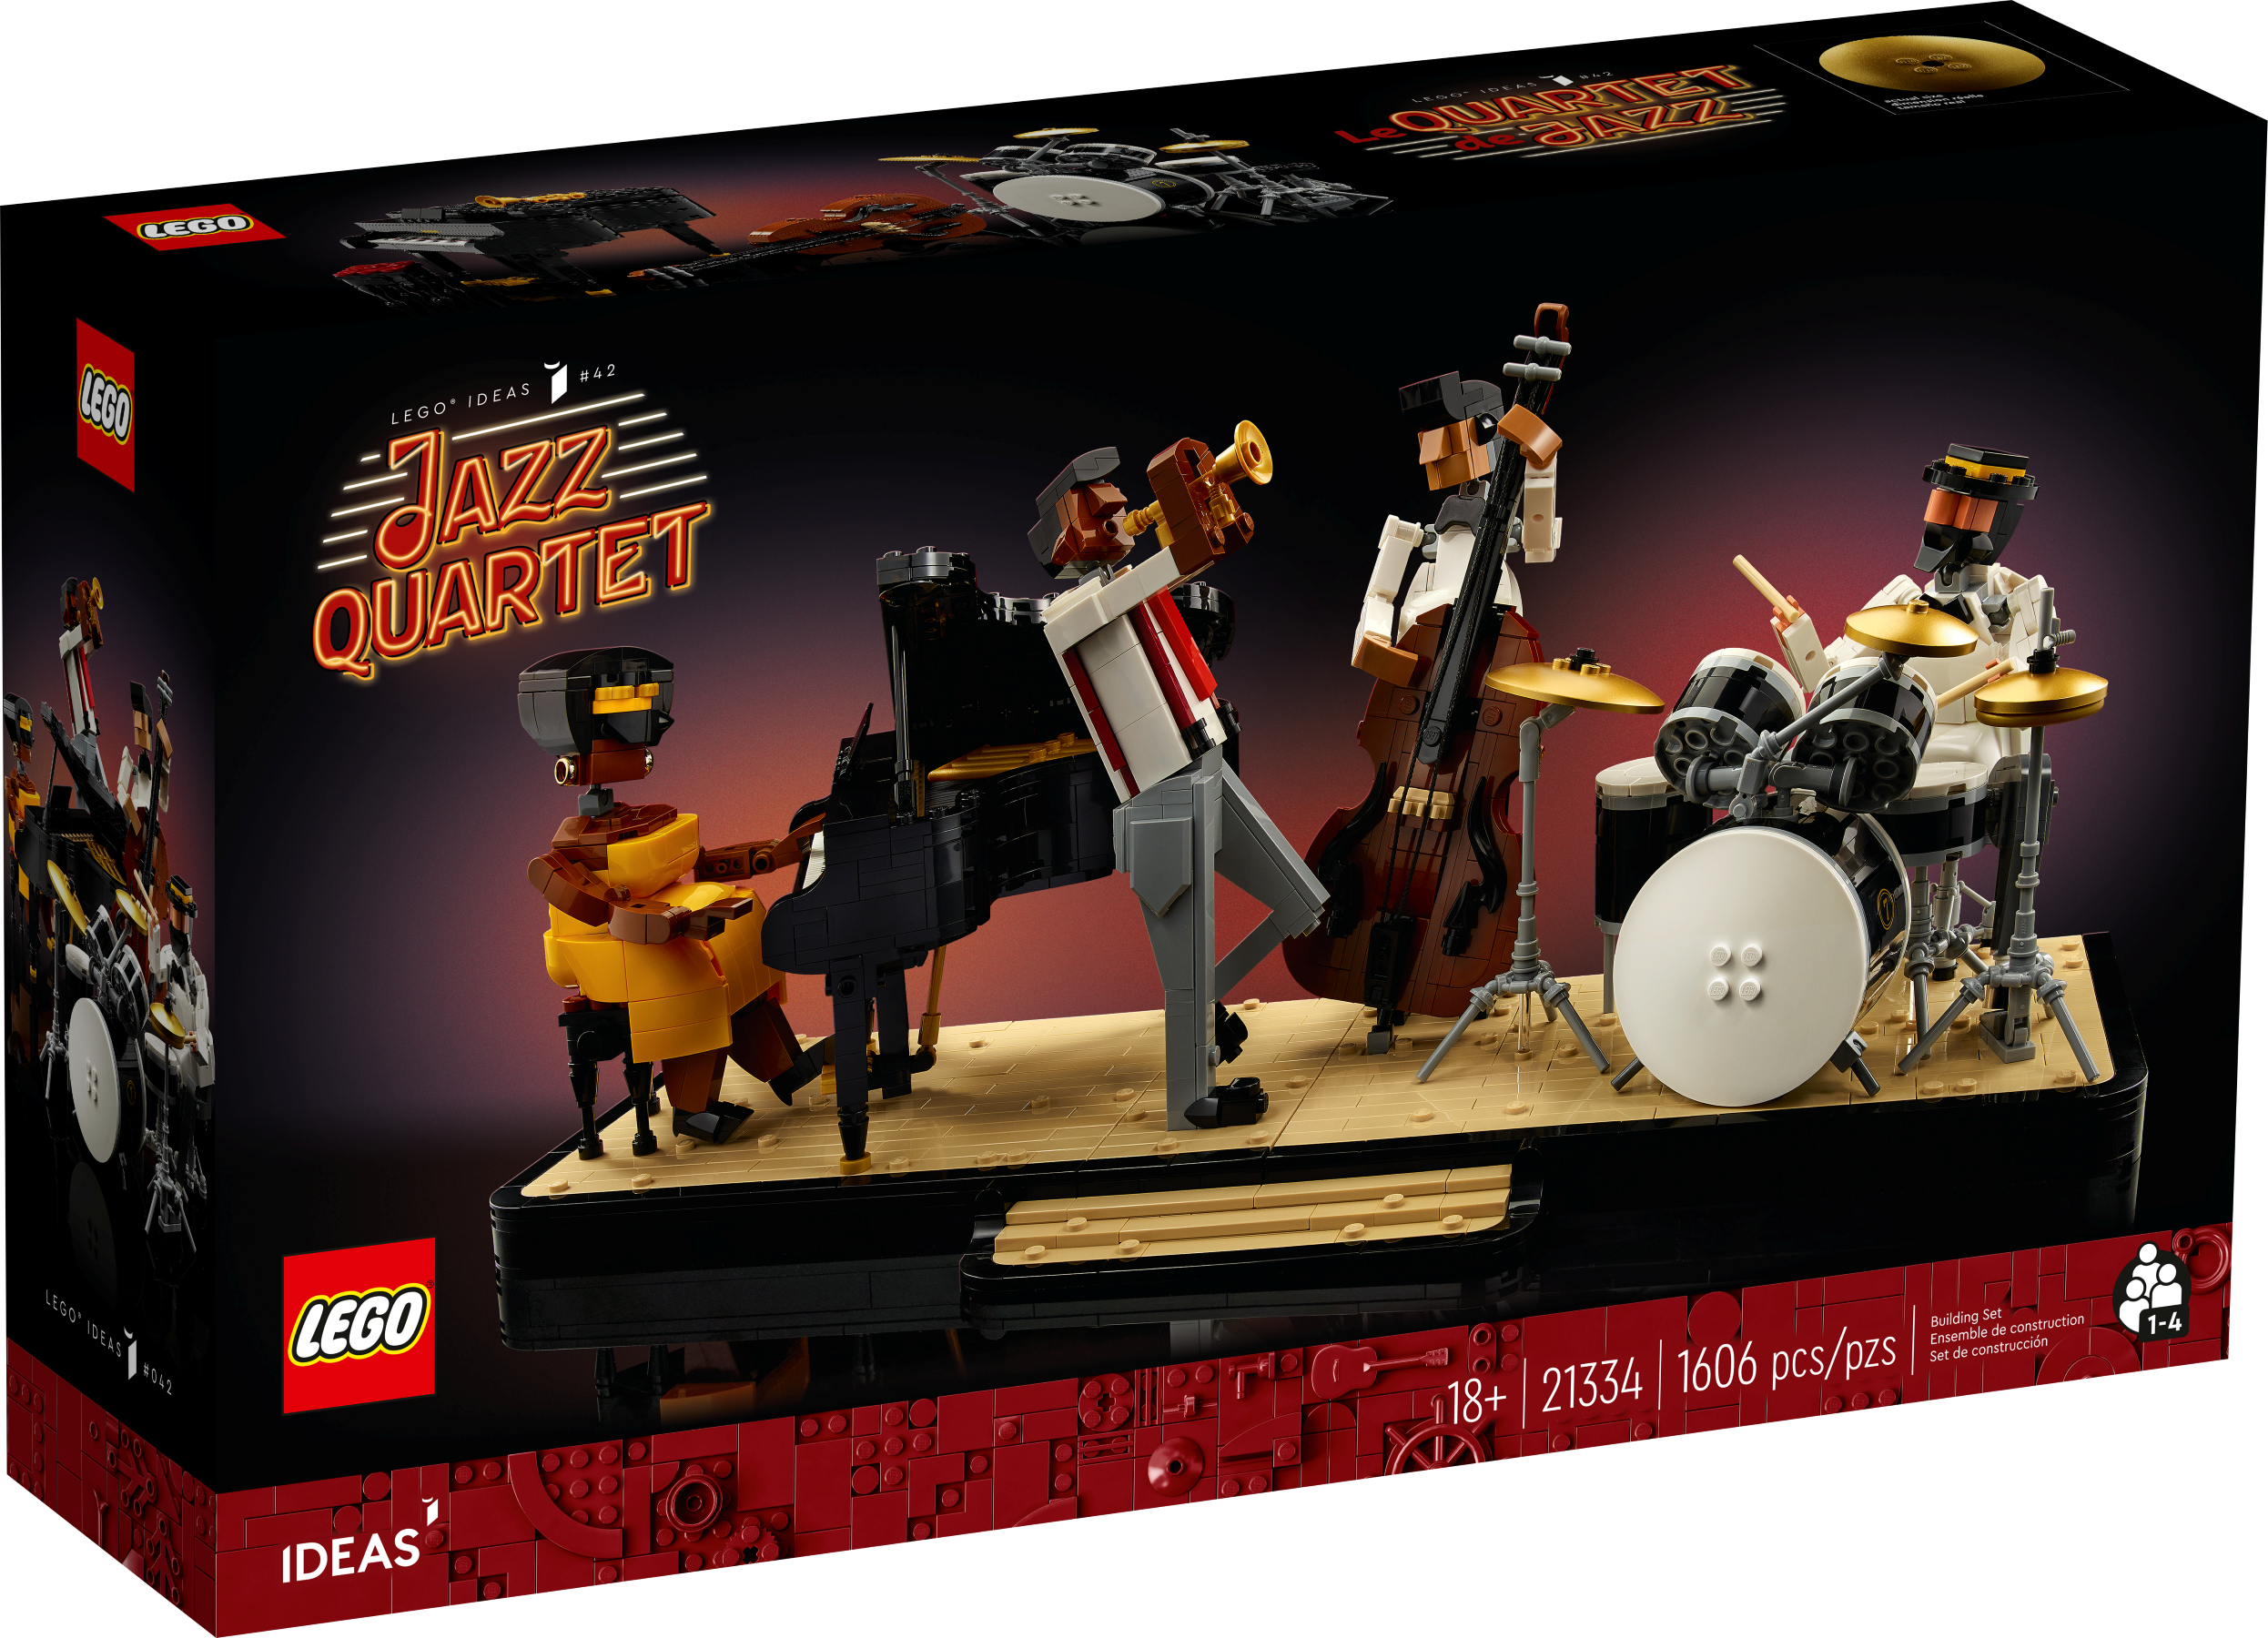 Jazz Quartet 21334 | Ideas | Buy online at the Official LEGO® Shop GB